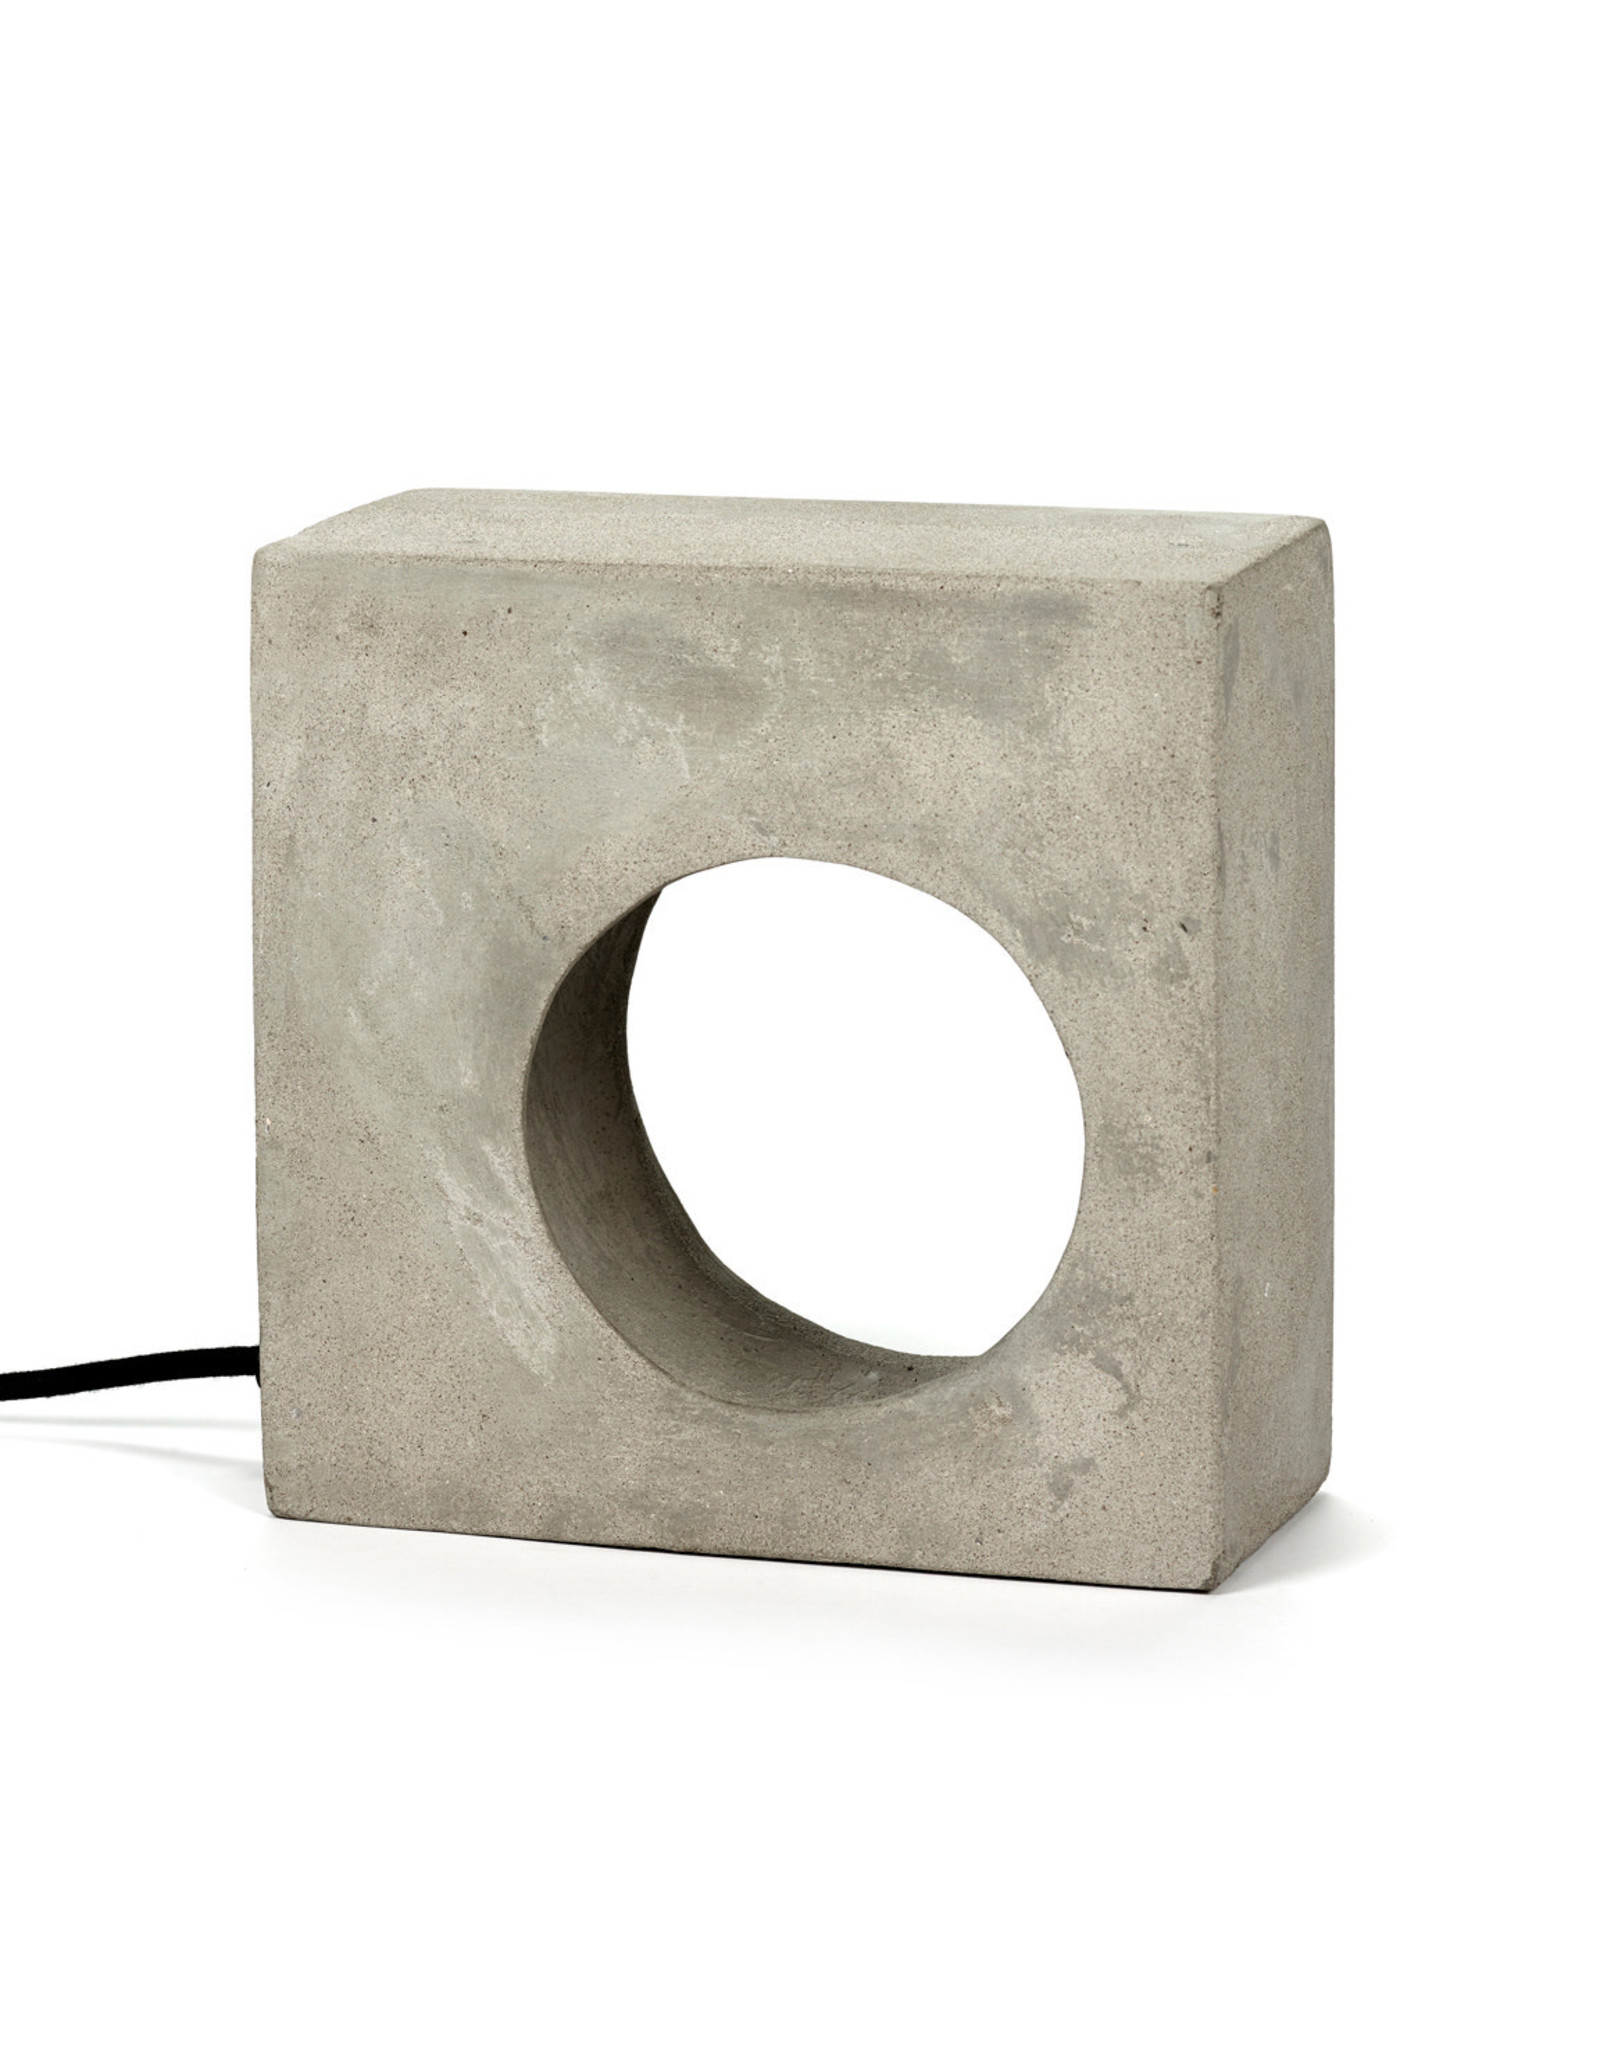 Serax light 'Flastaire' - concrete